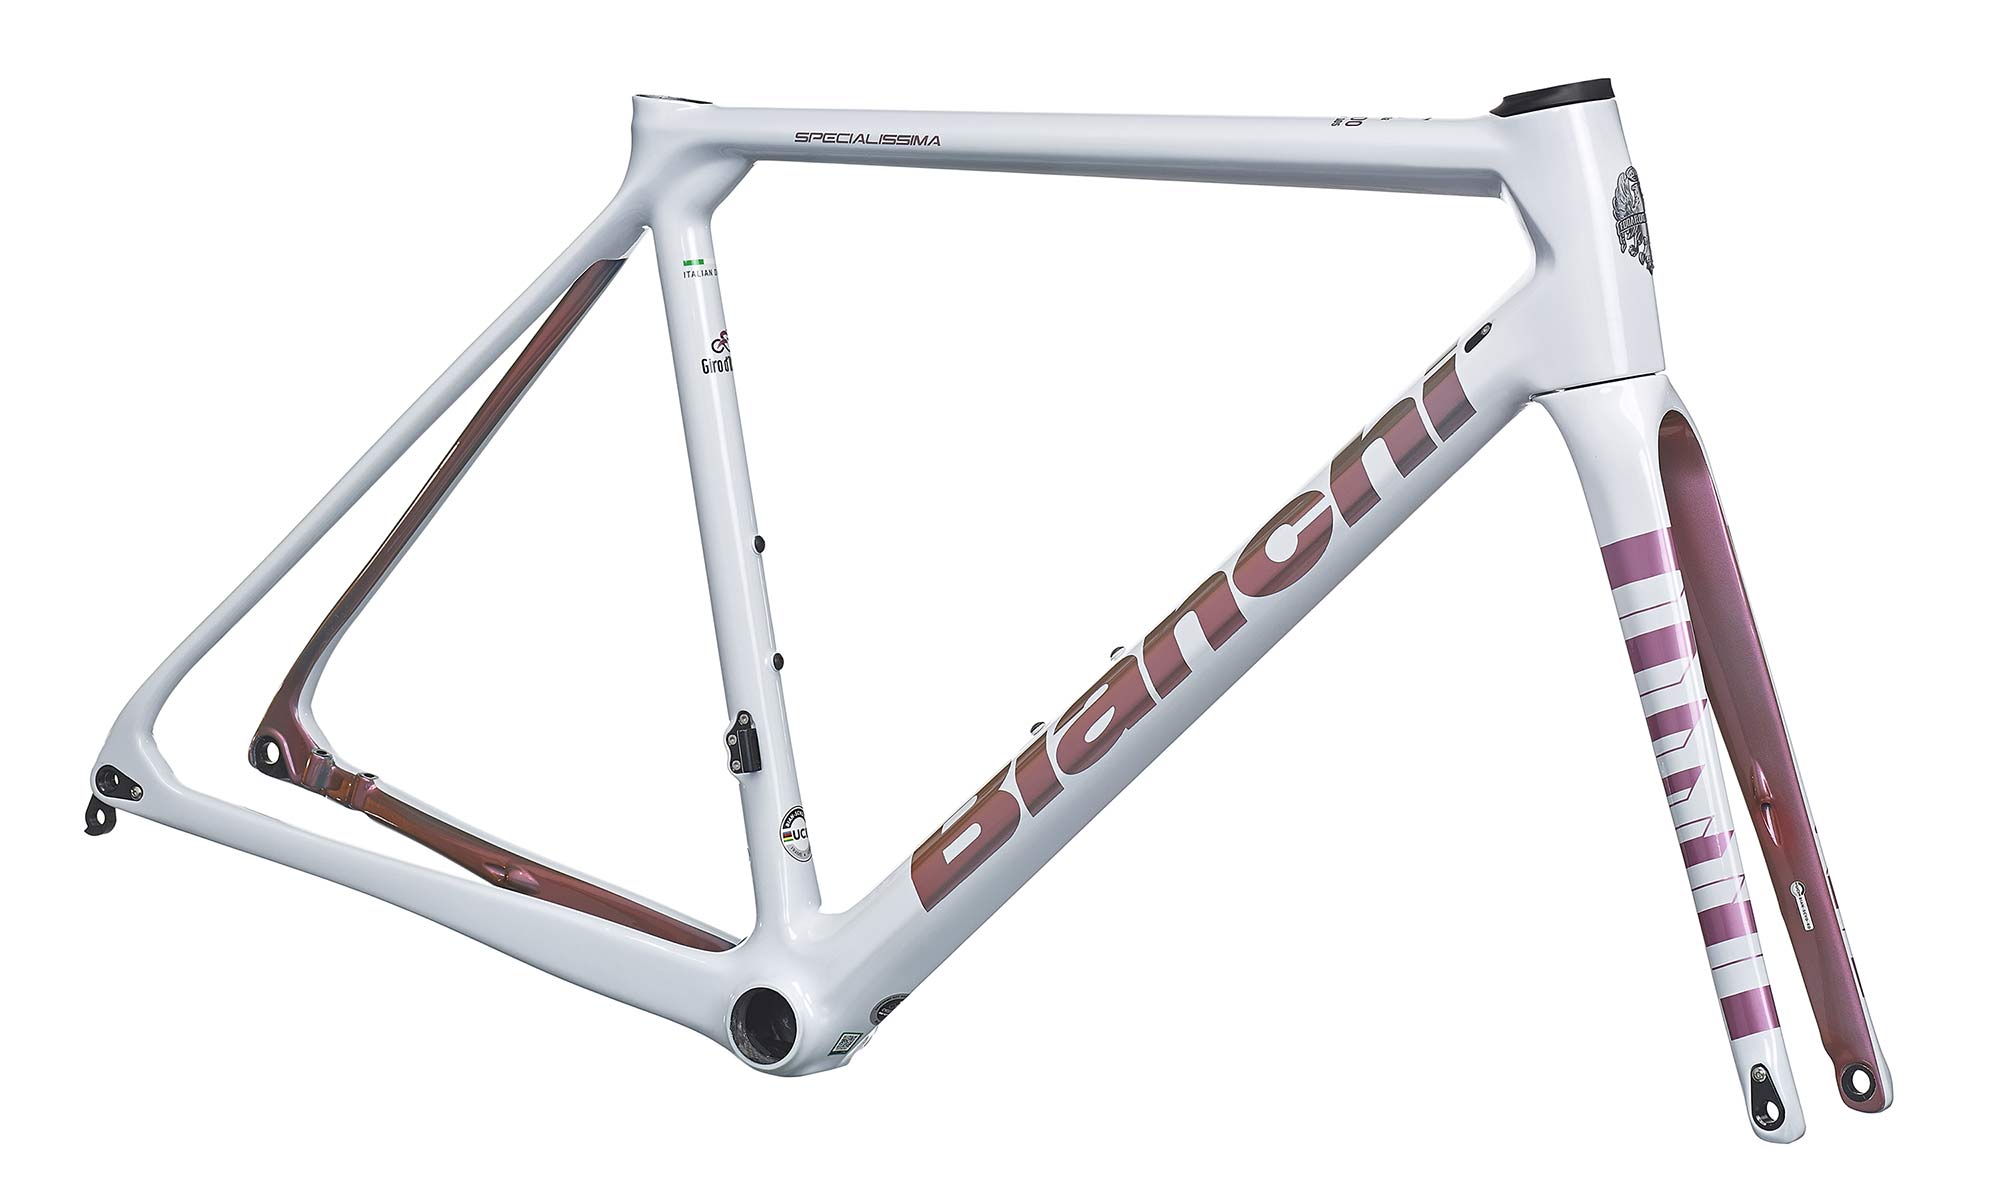 2022 Bianchi Specialissima Giro105 limited edition 105th anniversary Giro dItalia lightweight carbon road racing bike, frameset